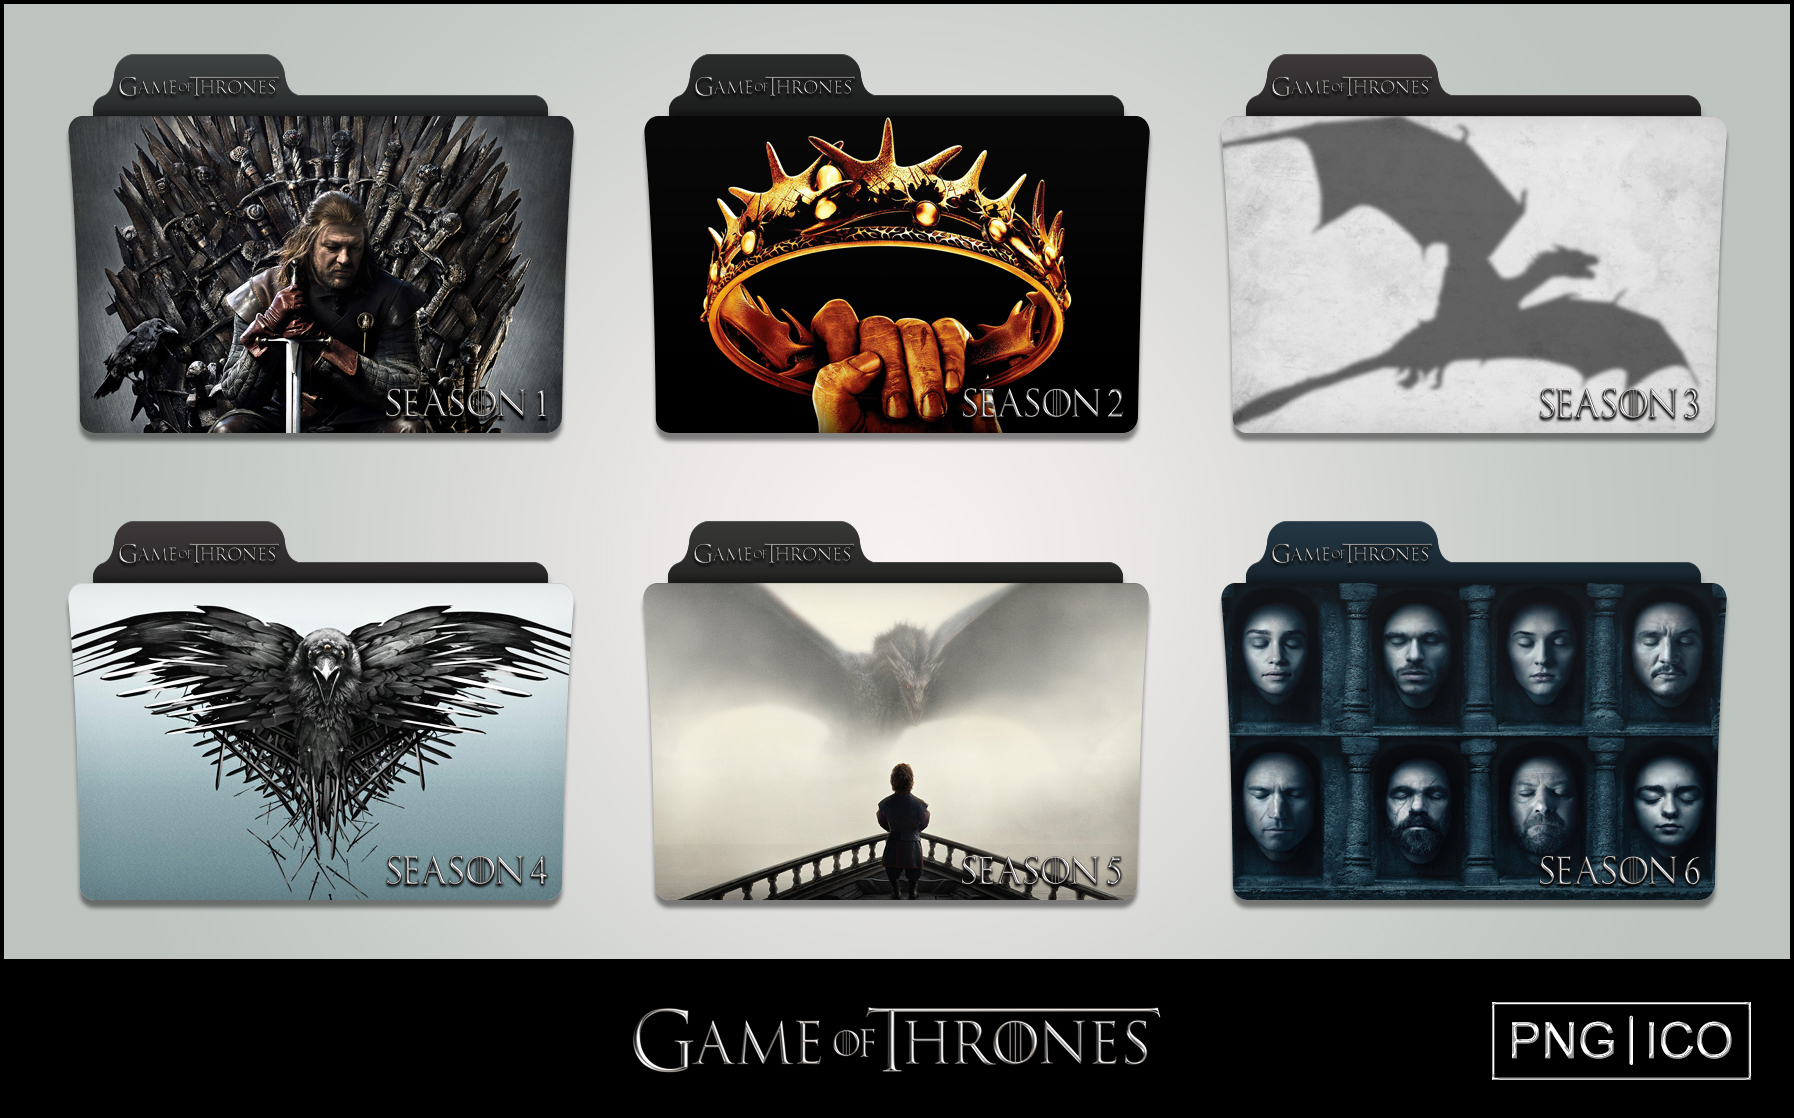 game of thrones folder icon